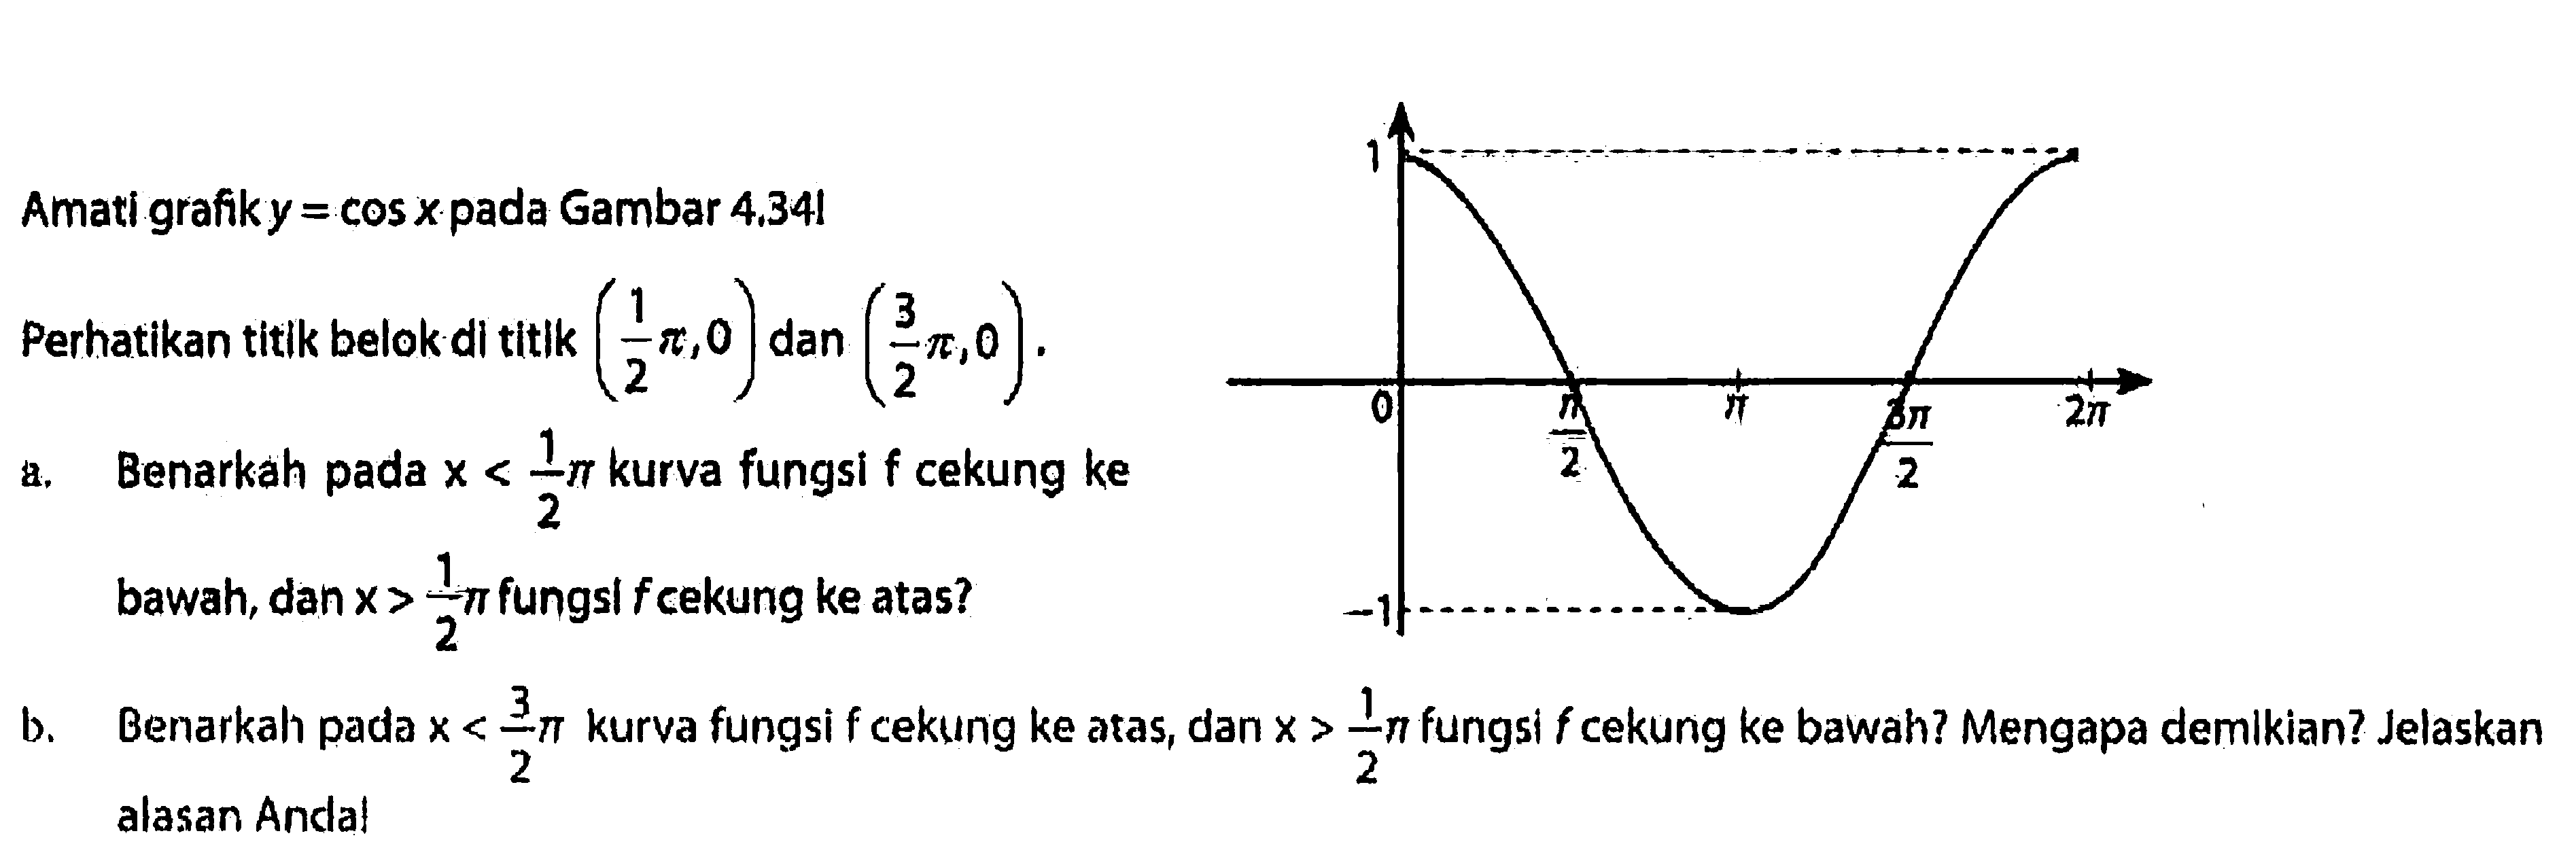 1 0 pi/2 pi (3 pi)/2 2 pi -1 
Amati grafik y = cos x pada Gambar 4.34! Perhatikan titik belok di titik (1/2 pi, 0) dan (3/2 pi, 0). 
a. Benarkah pada x < 1/2 pi kurva fungsi f cekung ke bawah, dan x > 1/2 pi fungsi f cekung ke atas? 
b. Benarkah pada x < 3/2 pi kurva fungsi f cekung ke atas, dan x > 1/2 pi fungsi f cekung ke bawah? Mengapa demikian? Jelaskan alasan Anda!